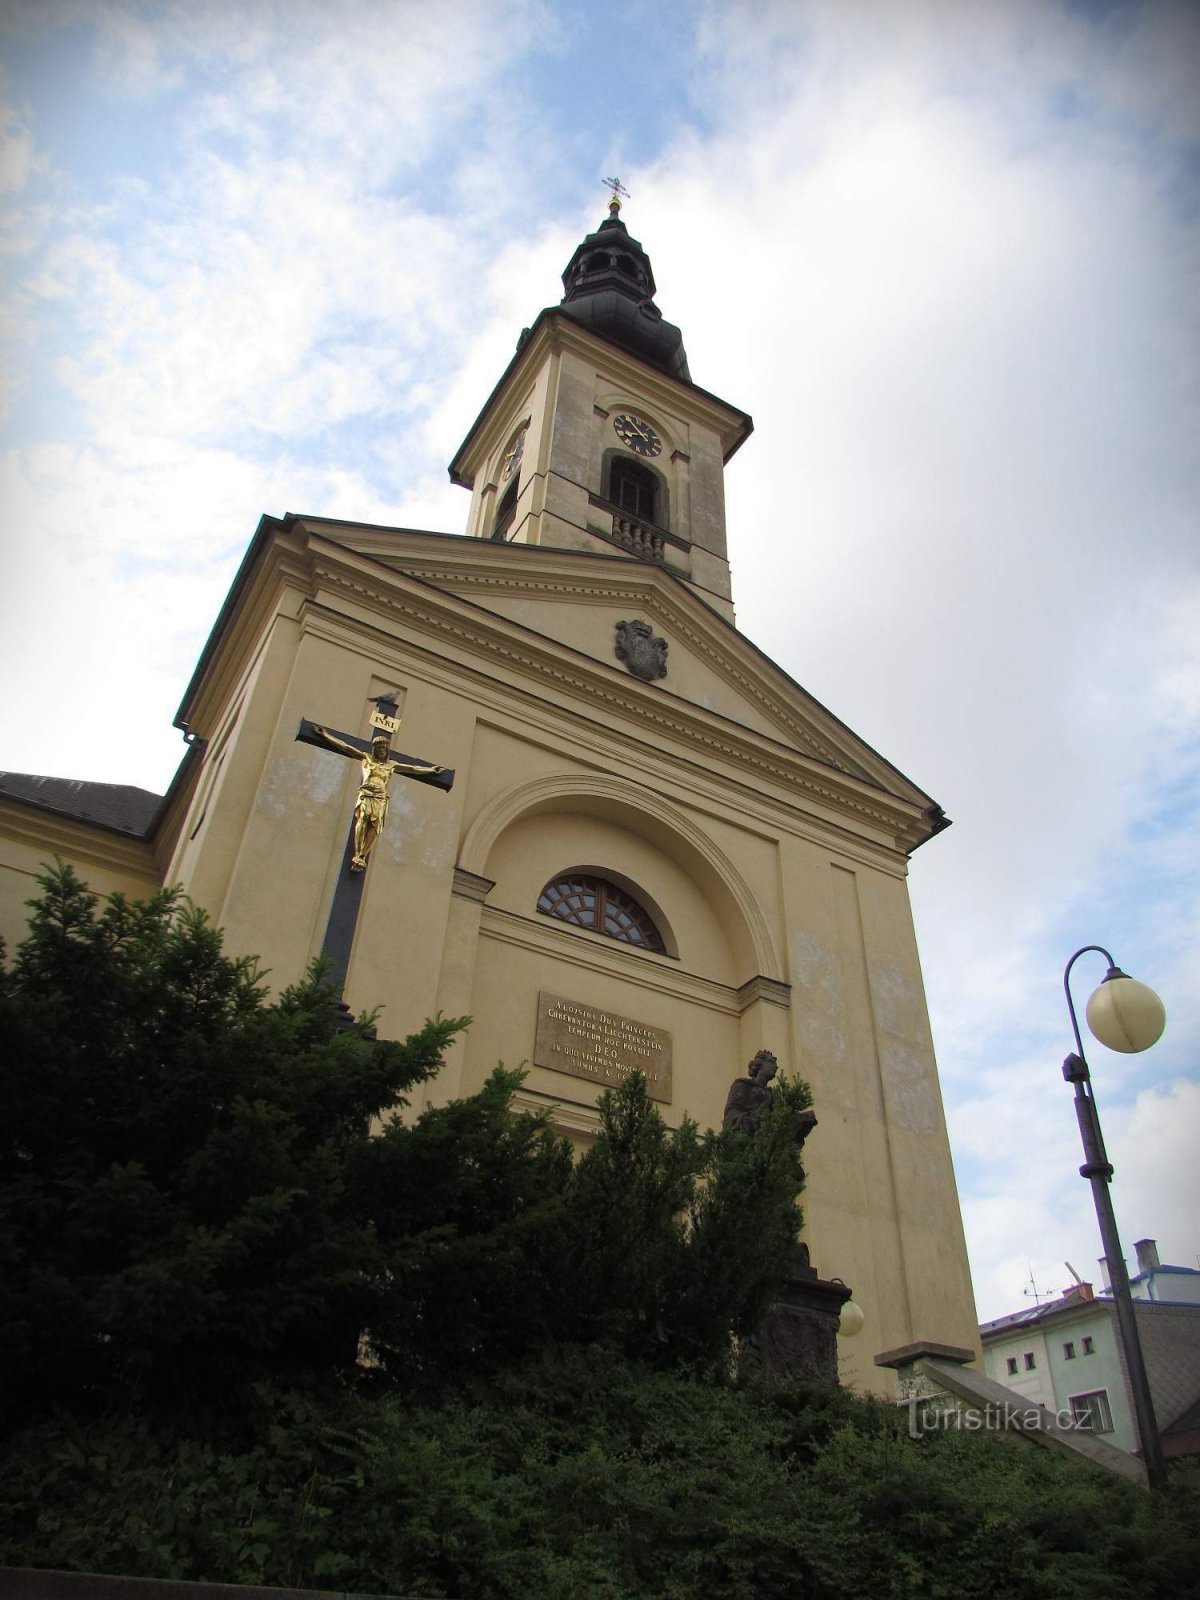 Česká Třebová - Igreja do Reitor de São Tiago